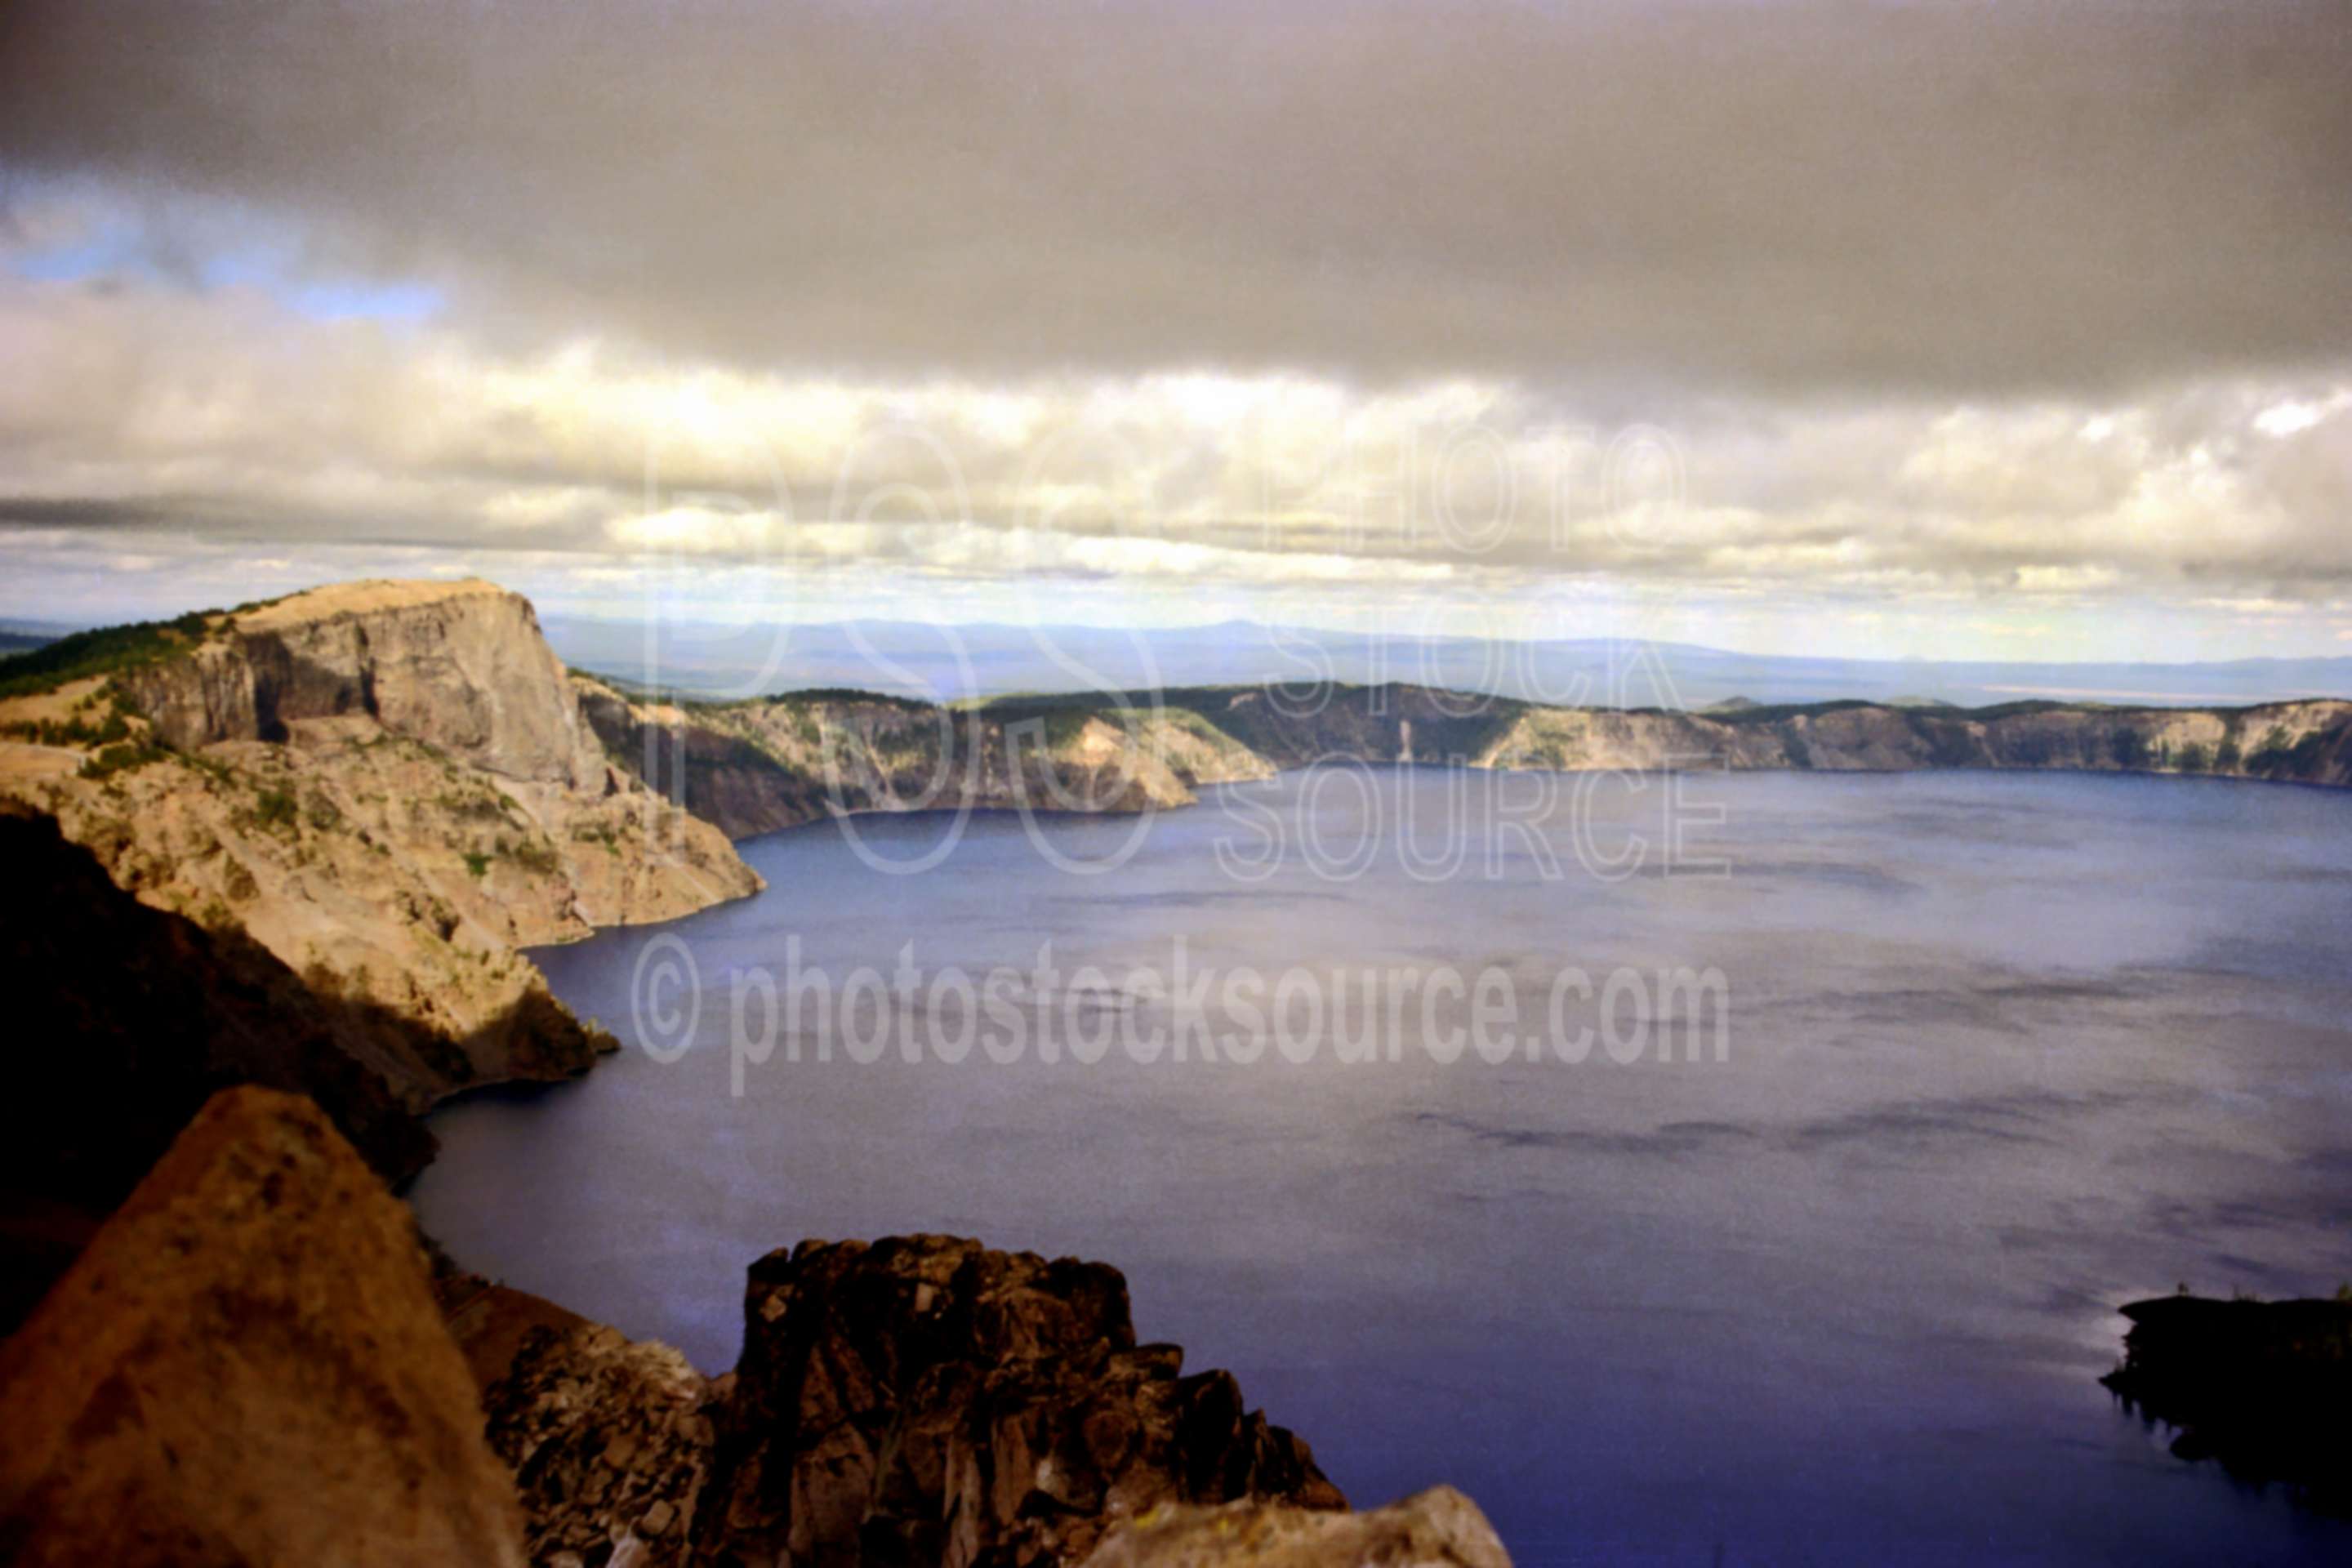 Llao Rock, Crater Lake,crater lake,llao rock,caldera,usas,lakes rivers,national park,nature